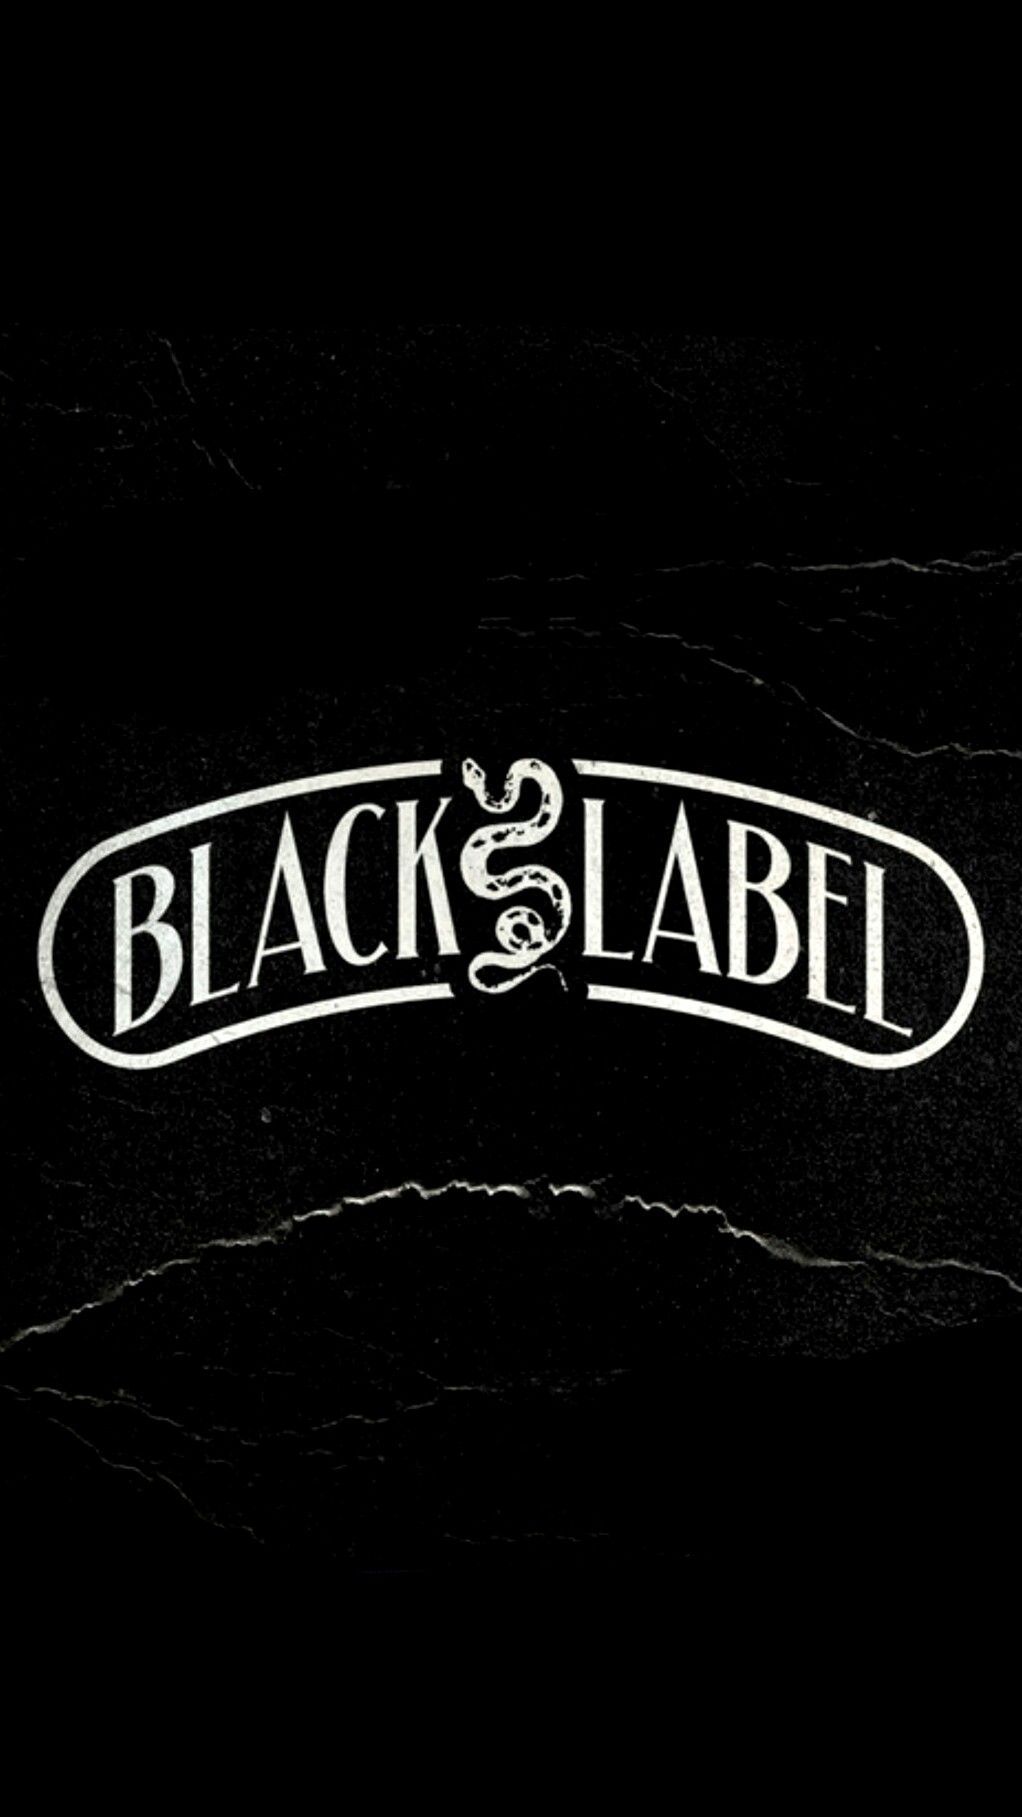 A Wallpaper Of Dubstep Riddim Label Never Say Die, Black Label